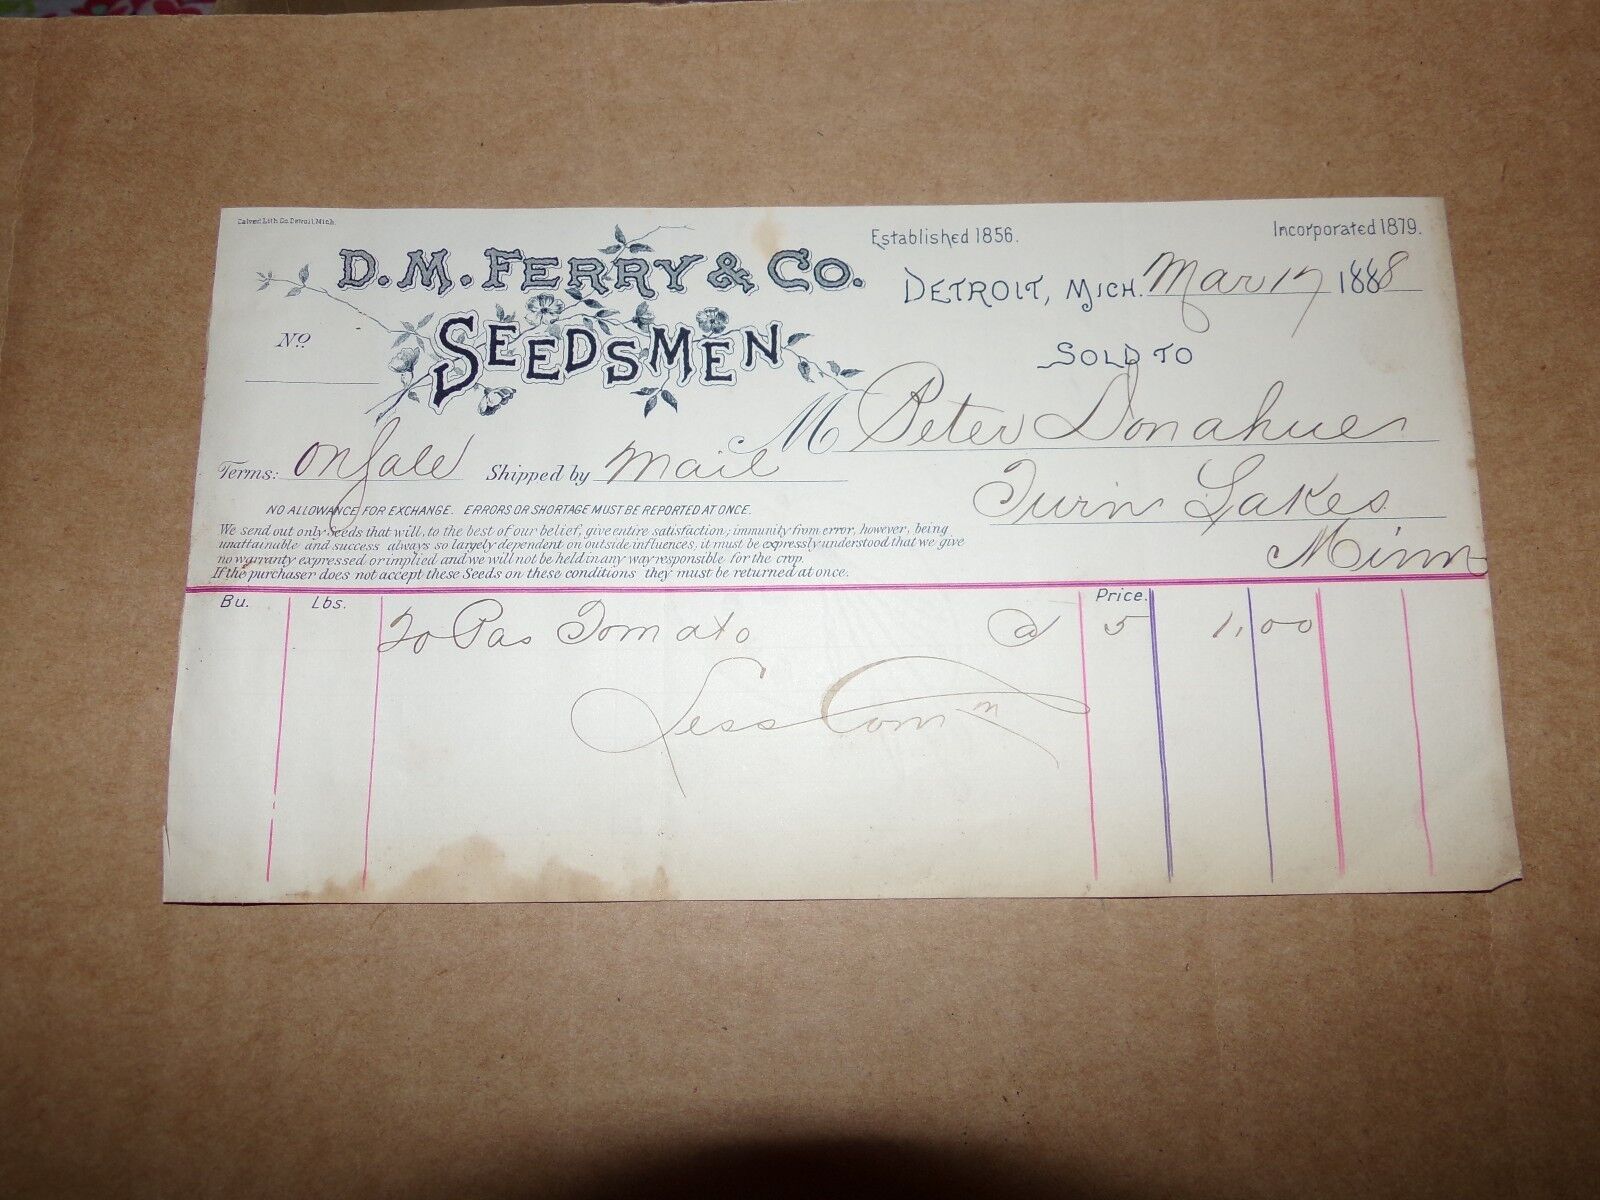 1888 DM Ferry & Co Seedsmen Detroit Michigan Letterhead   